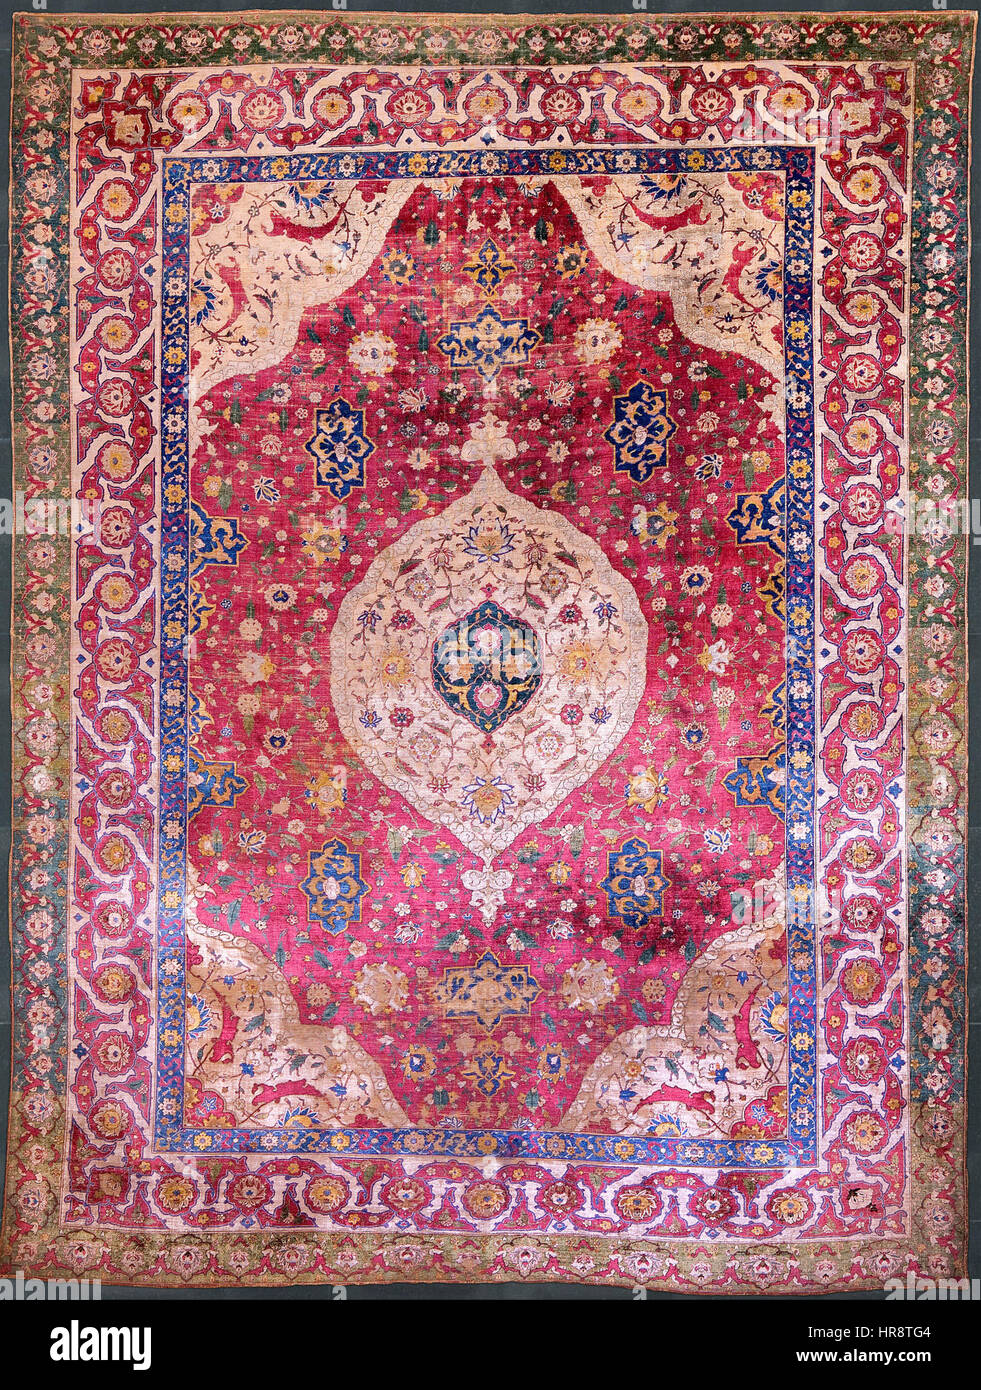 Unknown, Iran, mid-16th Century - The Rothschild Small Silk Medallion Carpet - Google Art Project Stock Photo